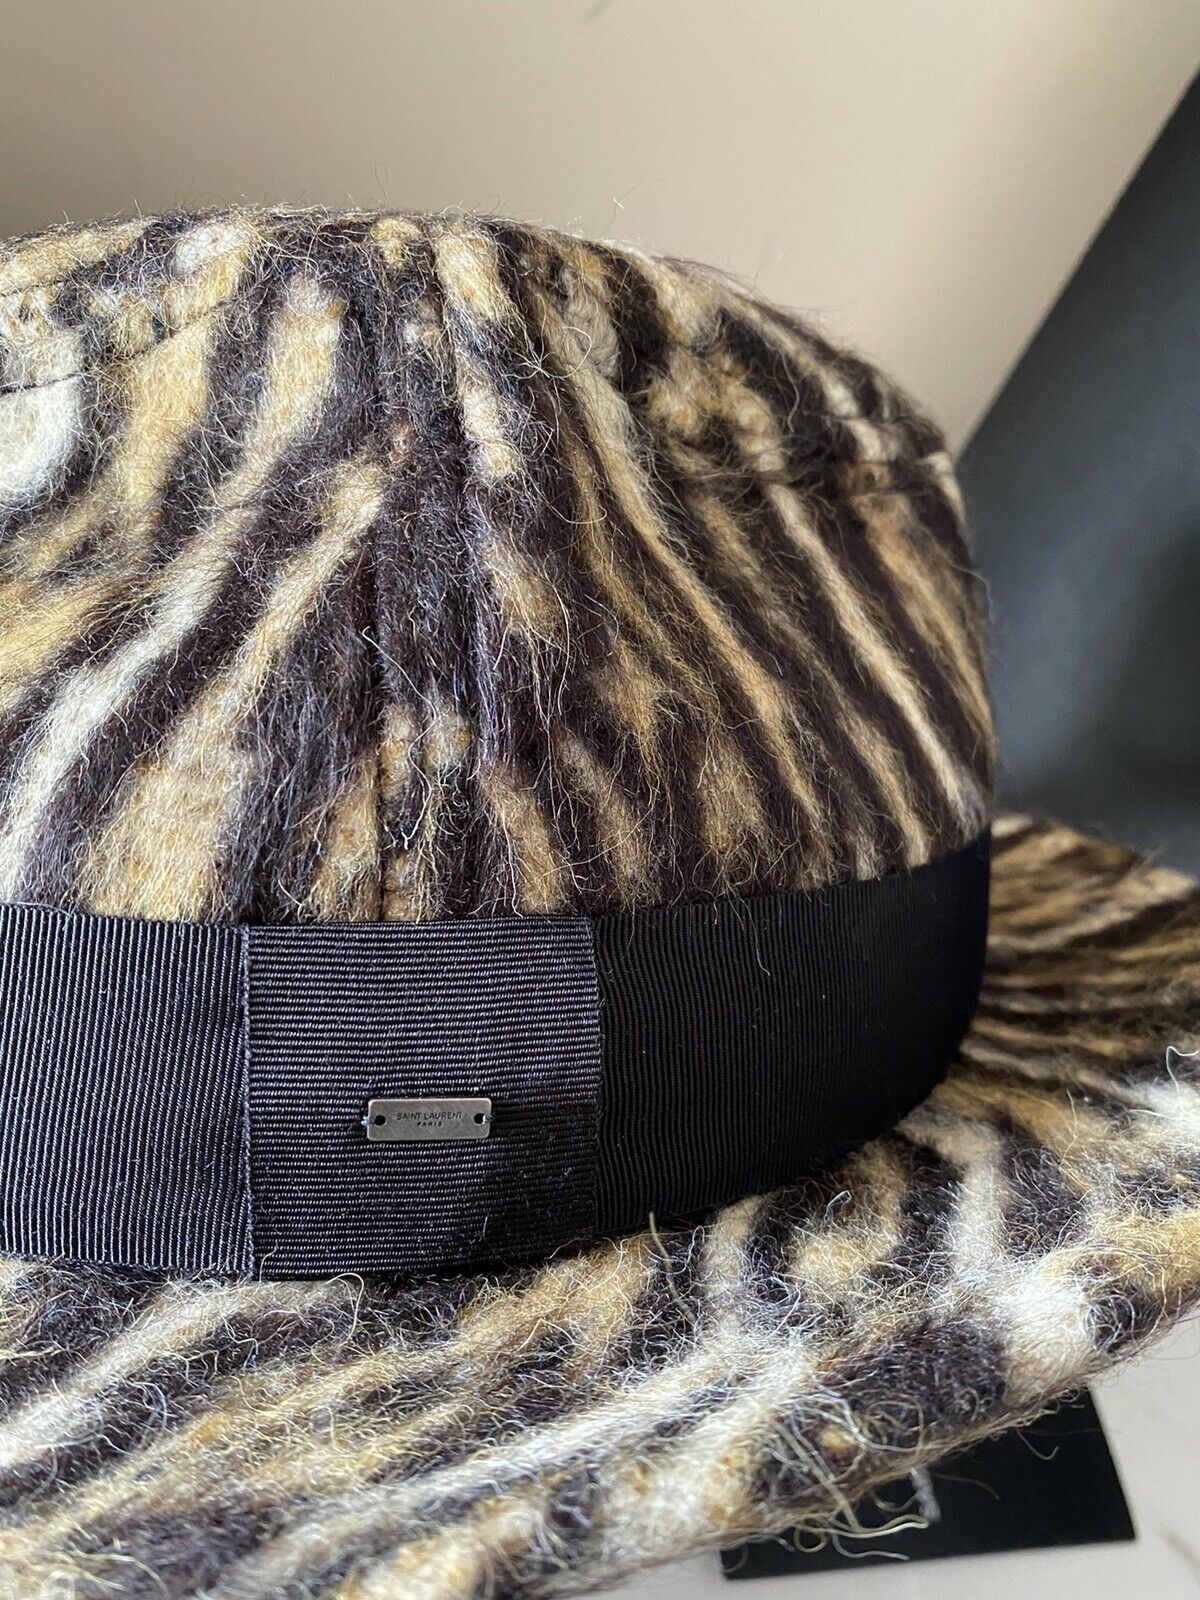 Женская шляпа-федора NWT Saint Laurent бежевого/черного цвета, размер S, Италия